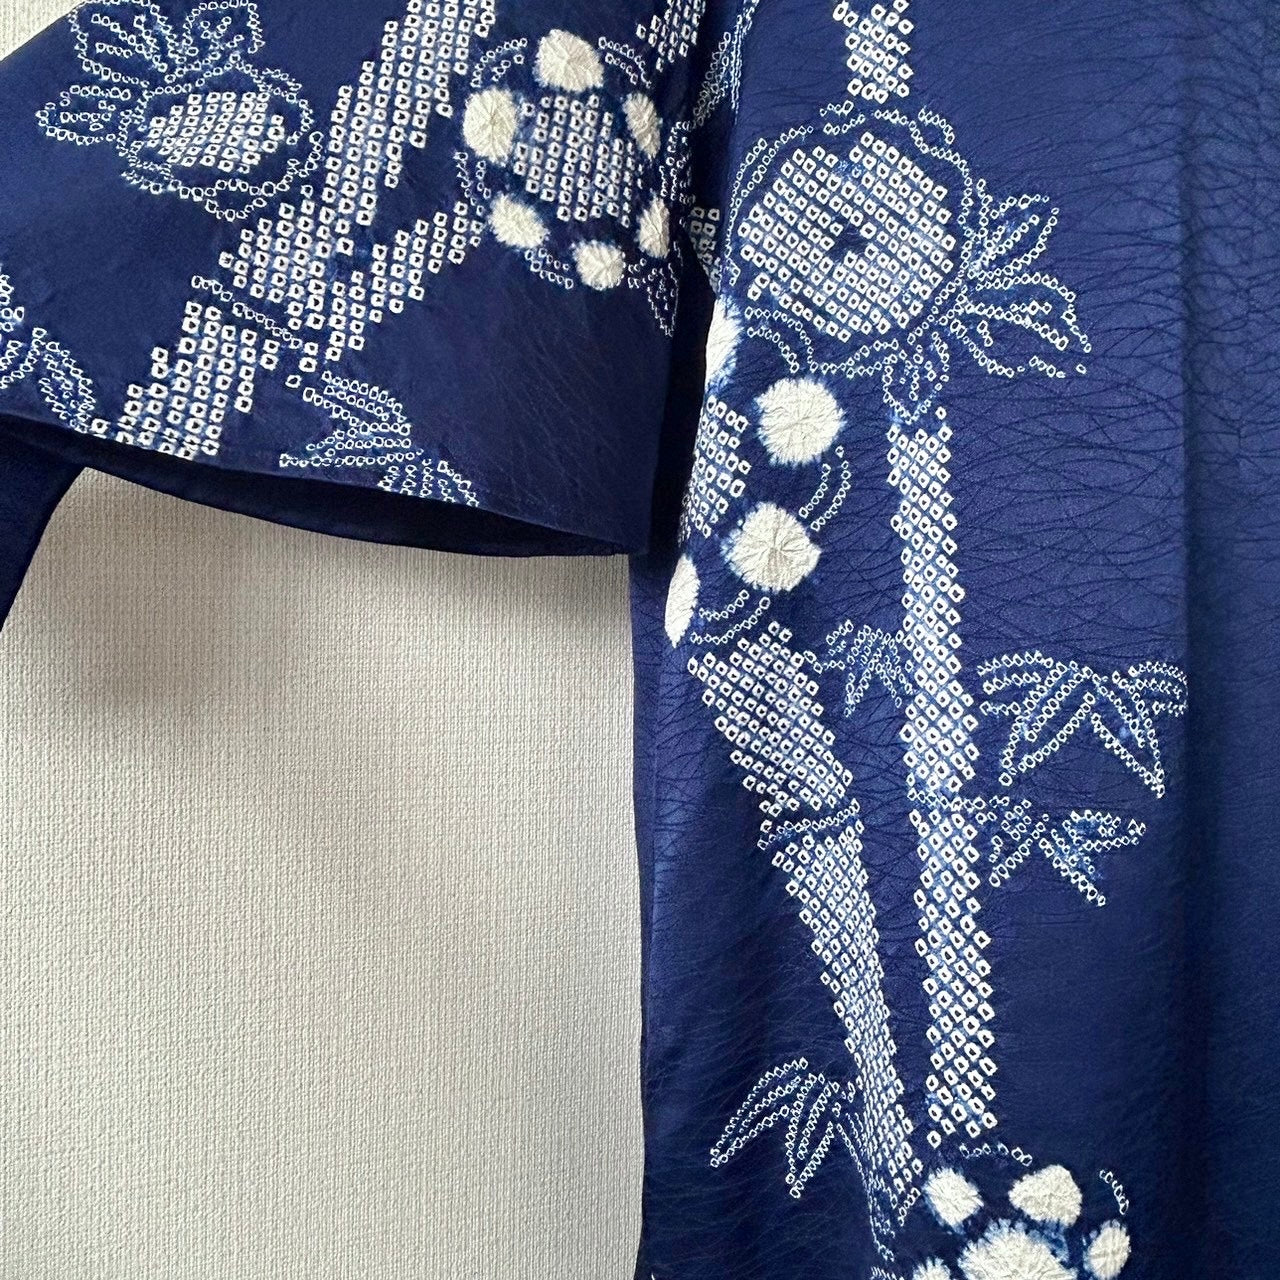 Kimono robe, Houmongi 訪問着, fabriquée à la main, recyclée #pre32